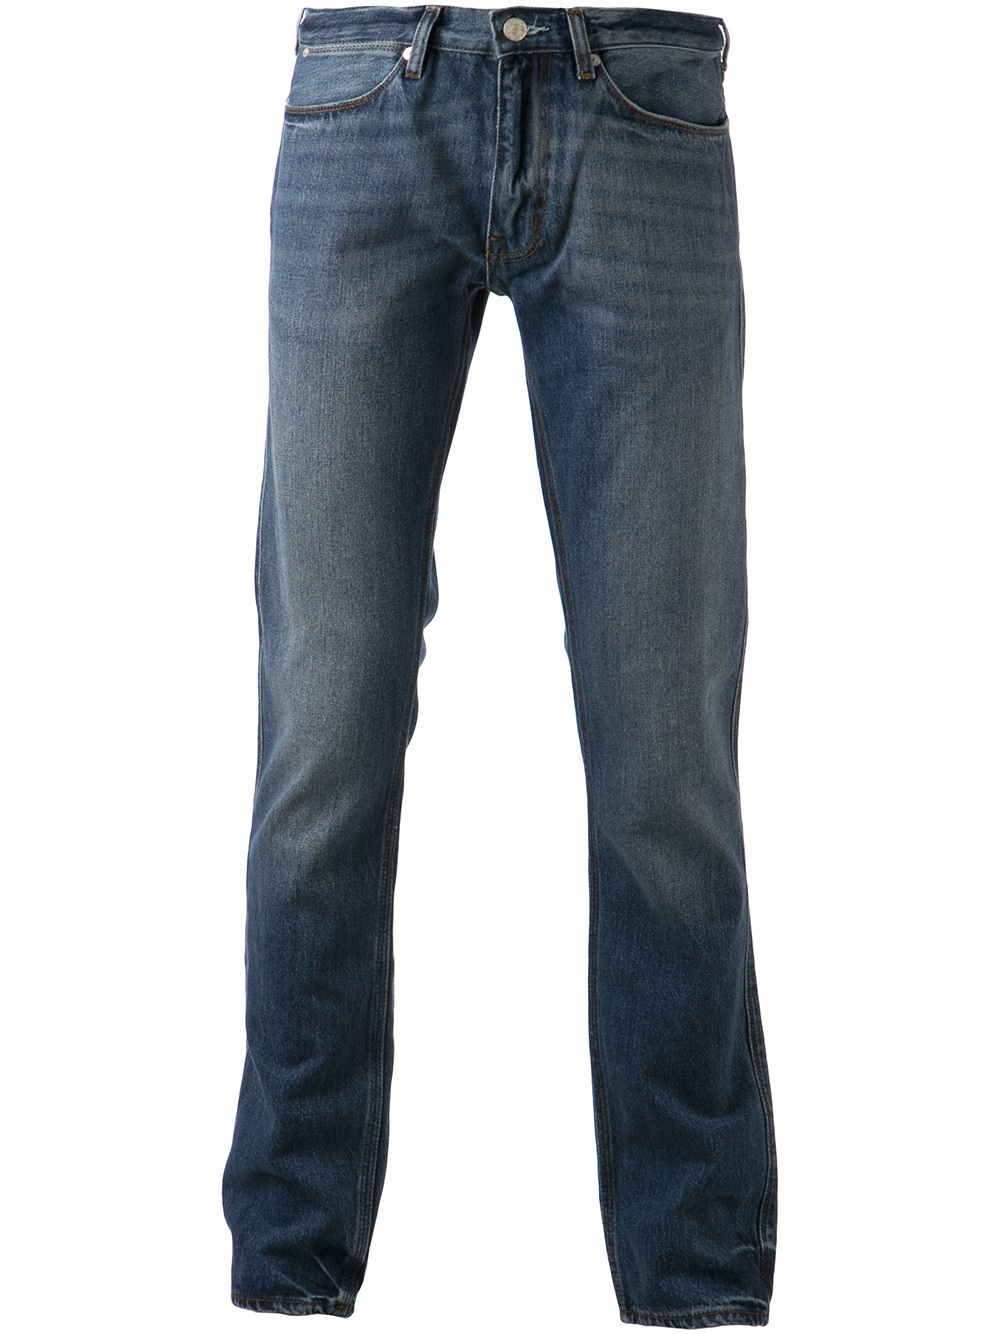 Acne Studios 'Max Vintage' Jean in Blue for Men - Lyst